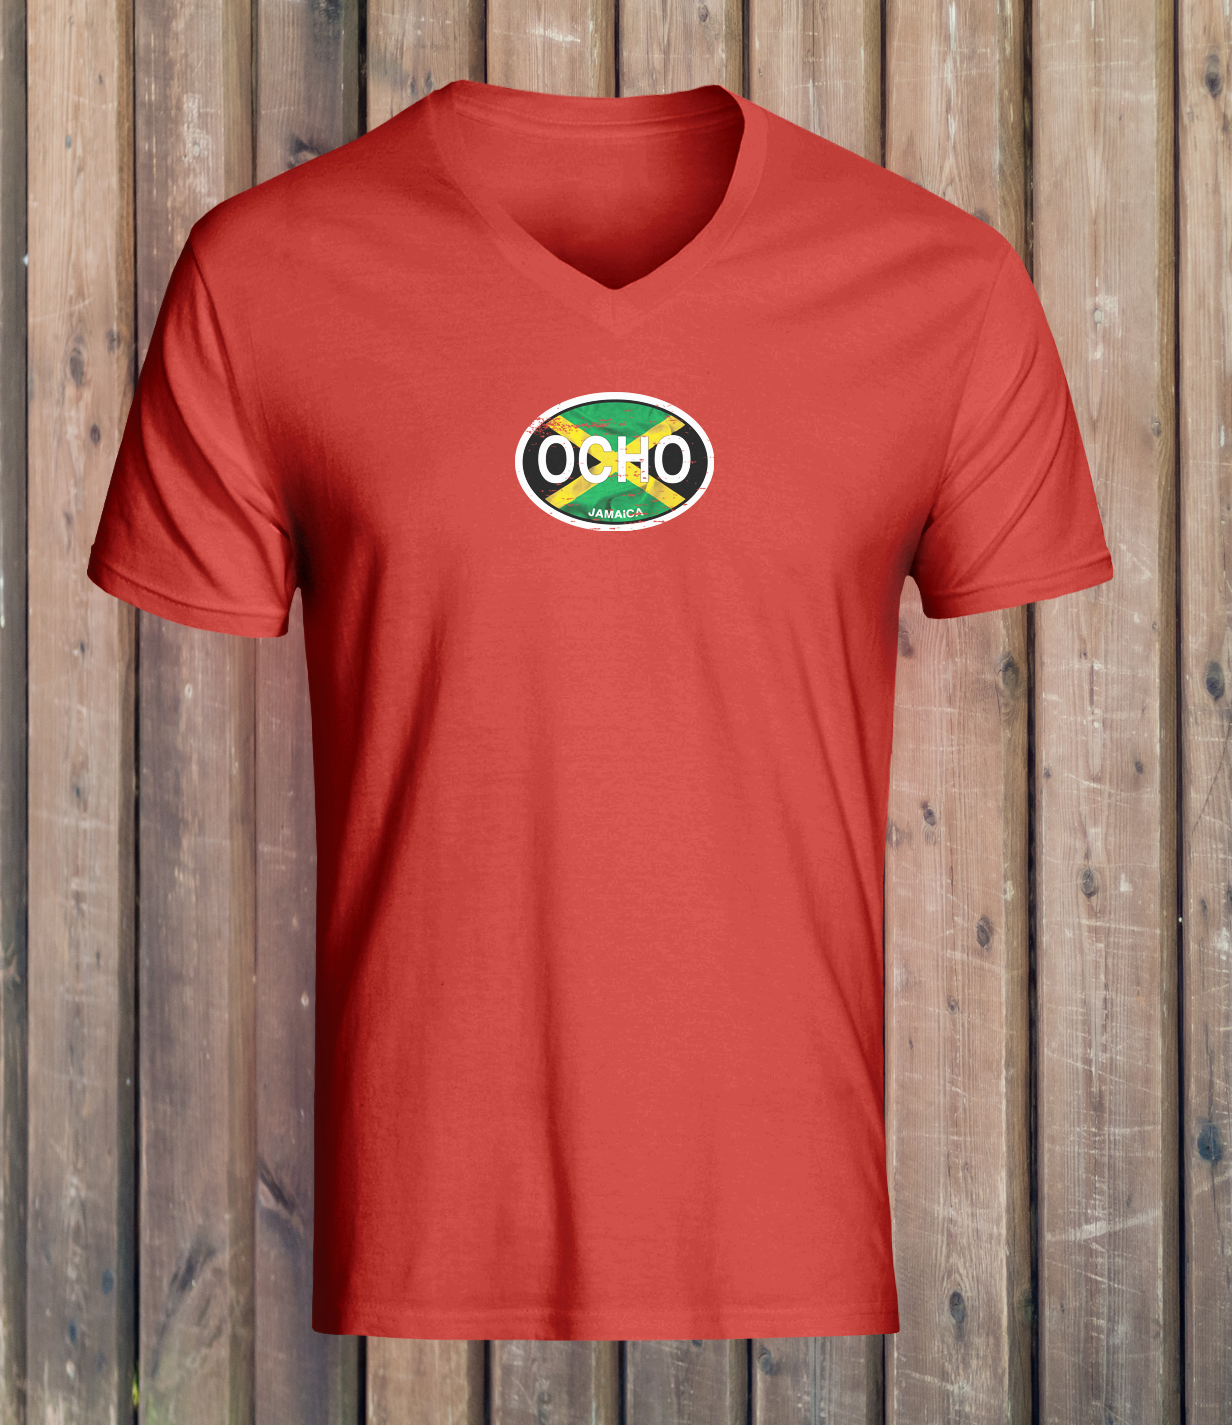 Ocho Rios Women's Flag V-Neck T-Shirts - My Destination Location